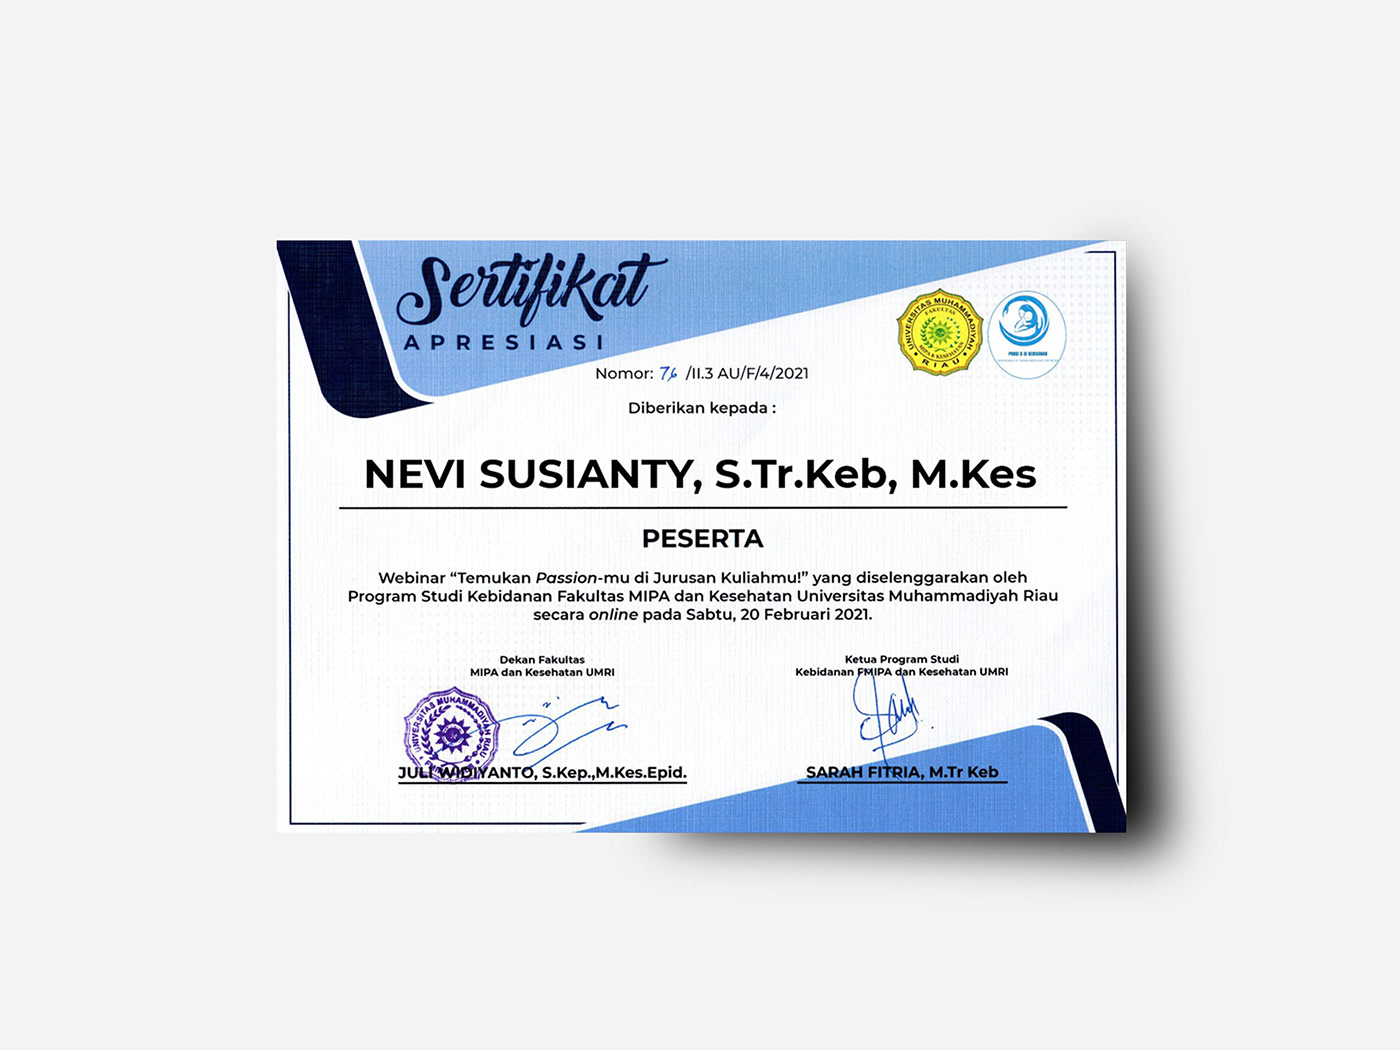 A4 paper a4 size certificate participants Sertifikat webinar